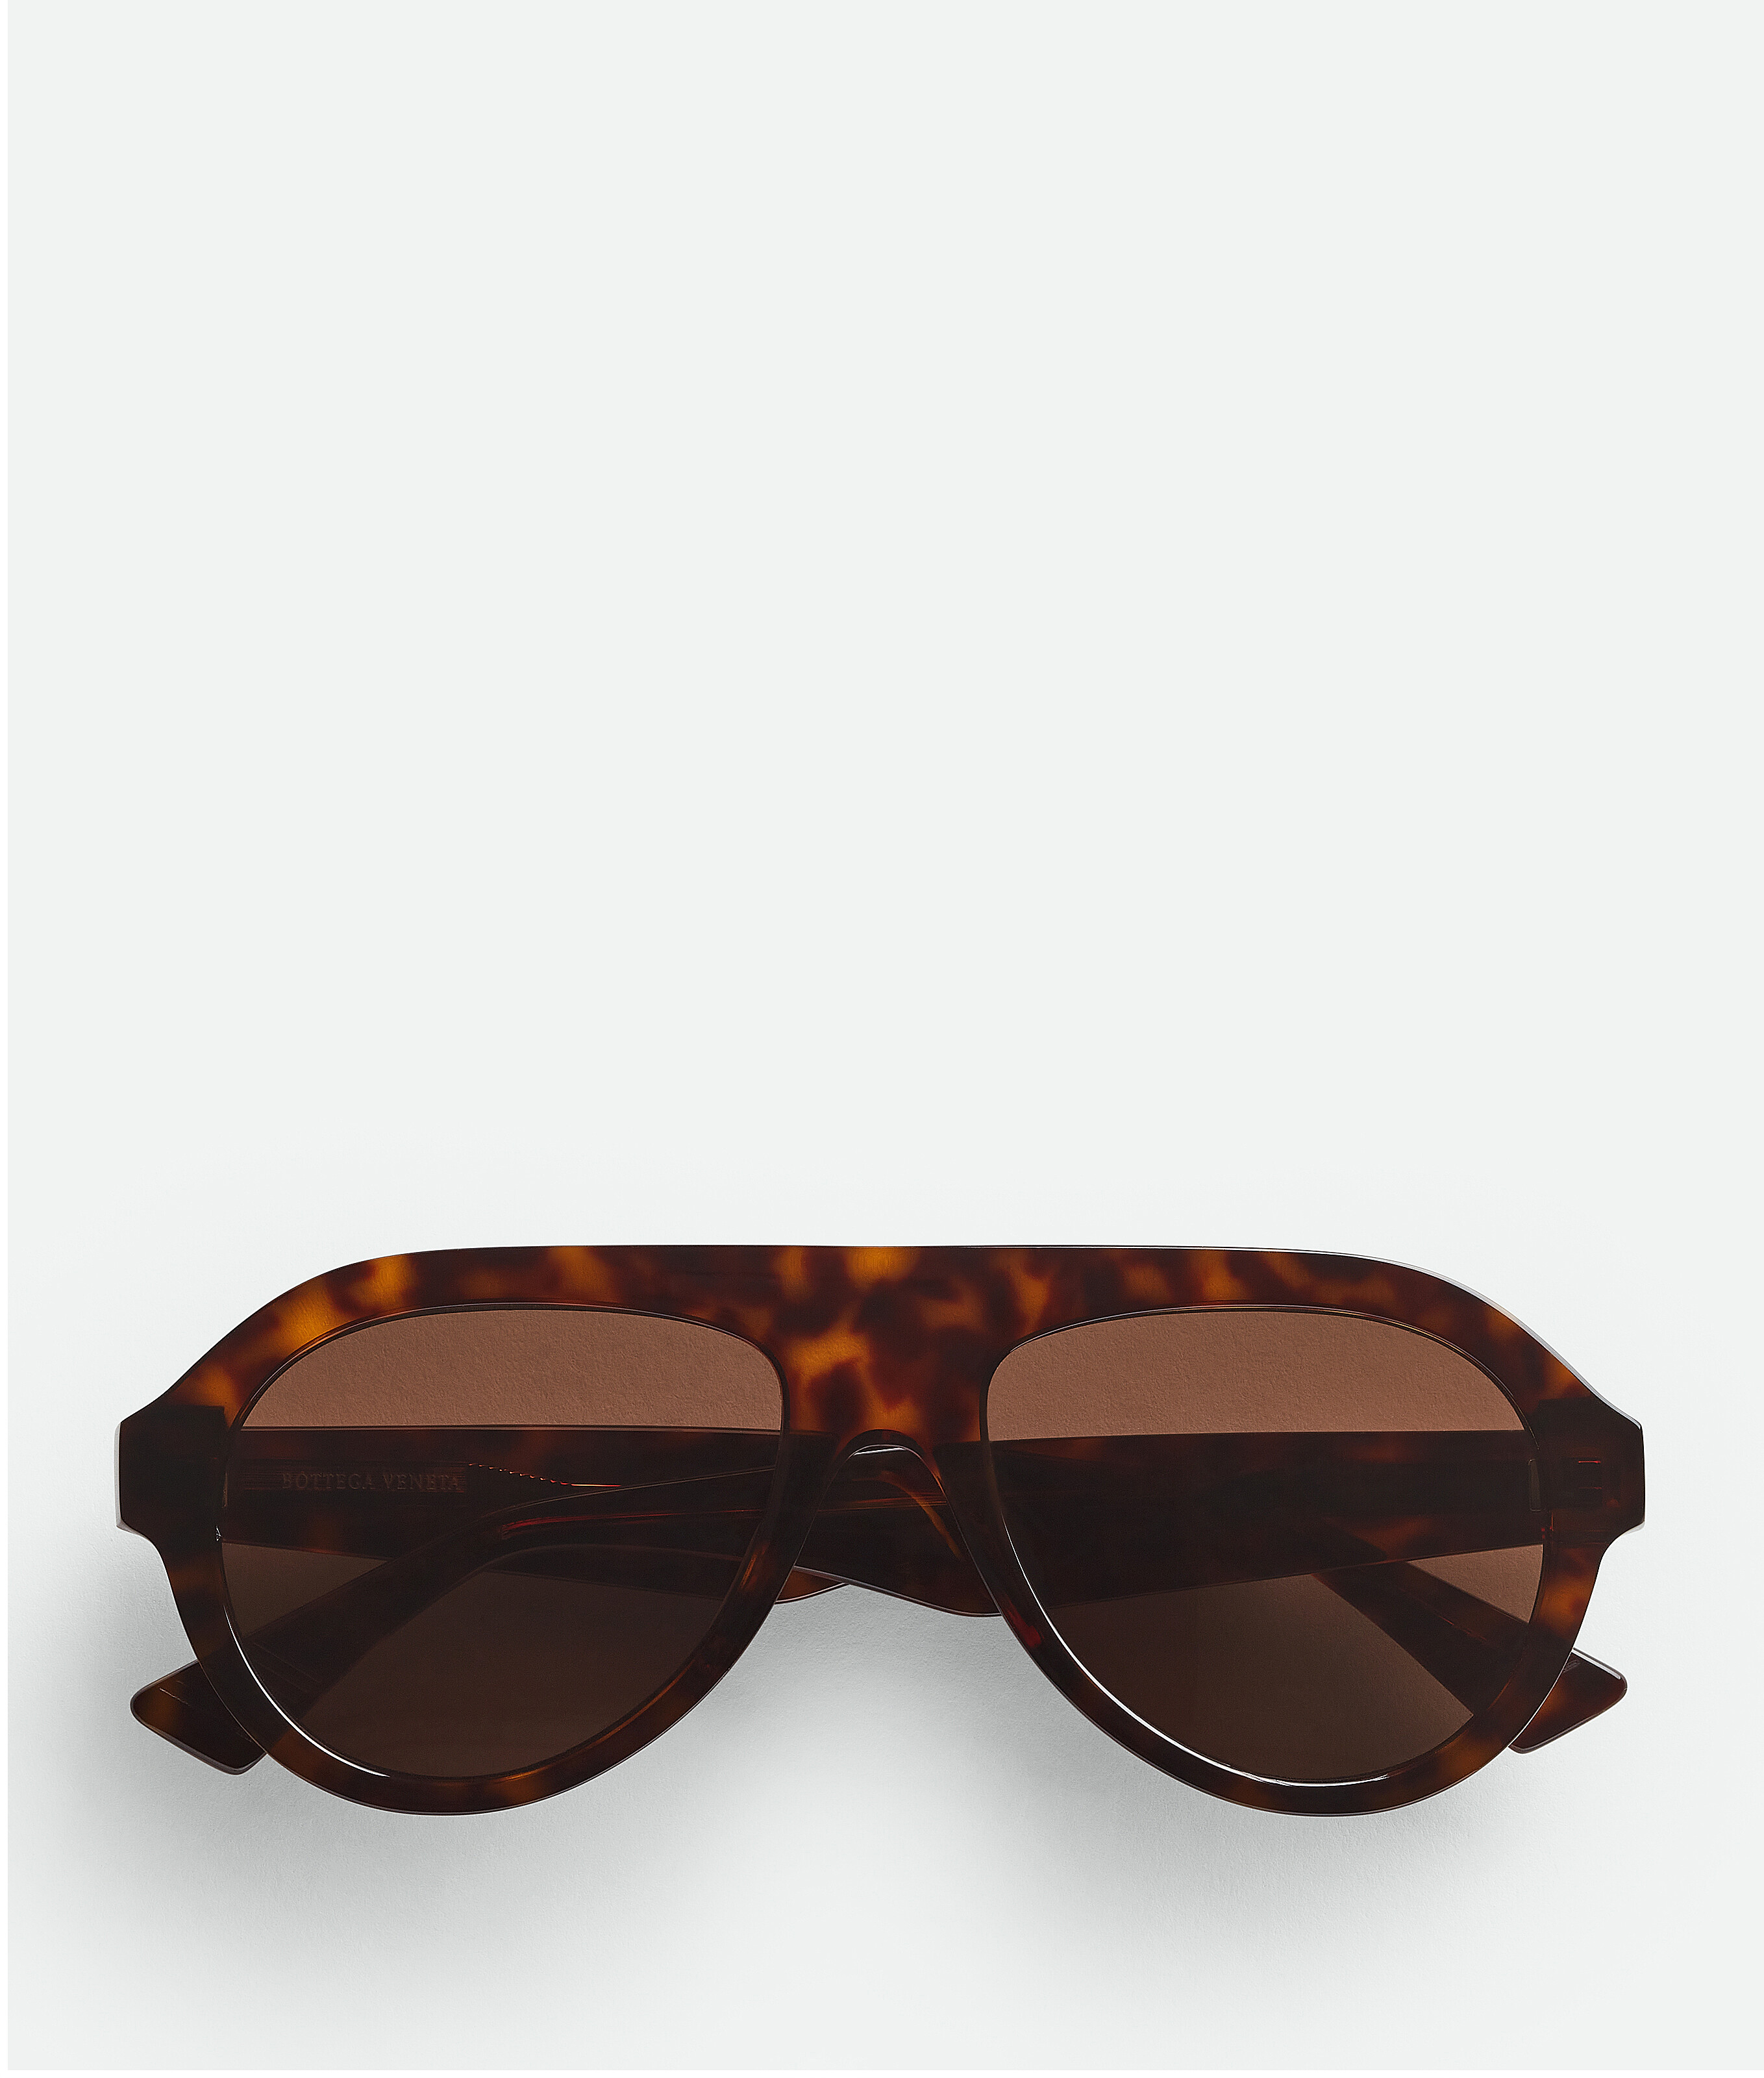 Bottega Veneta Women's Aviator Sunglasses